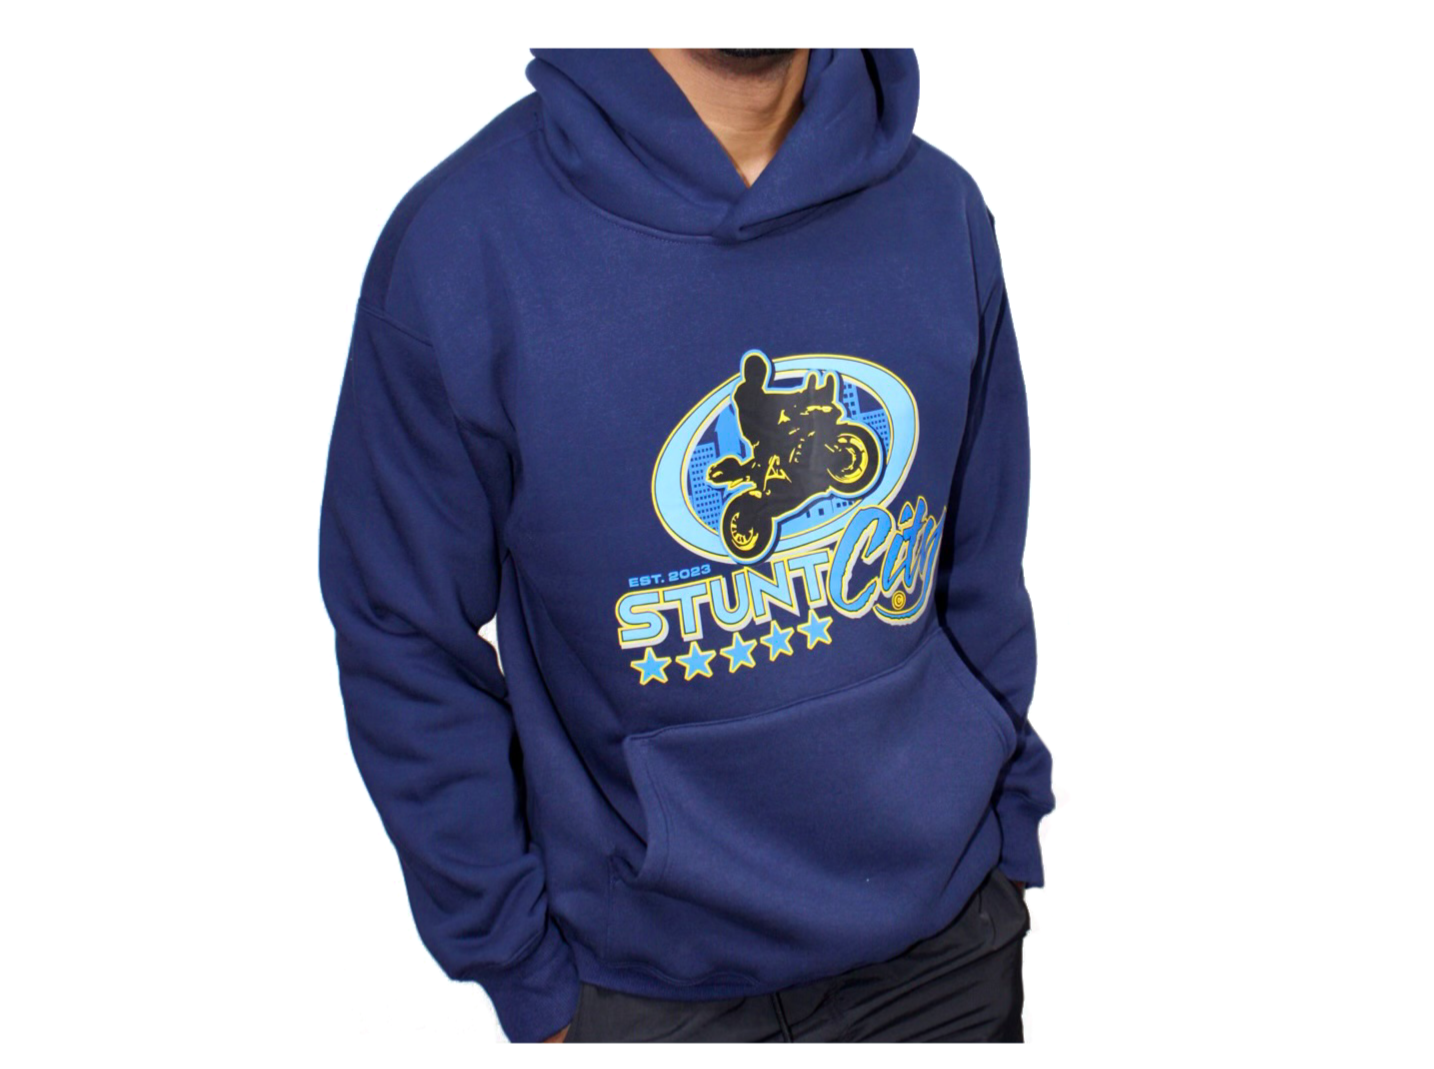 Navy blue hoodie with blue stuntcity logo